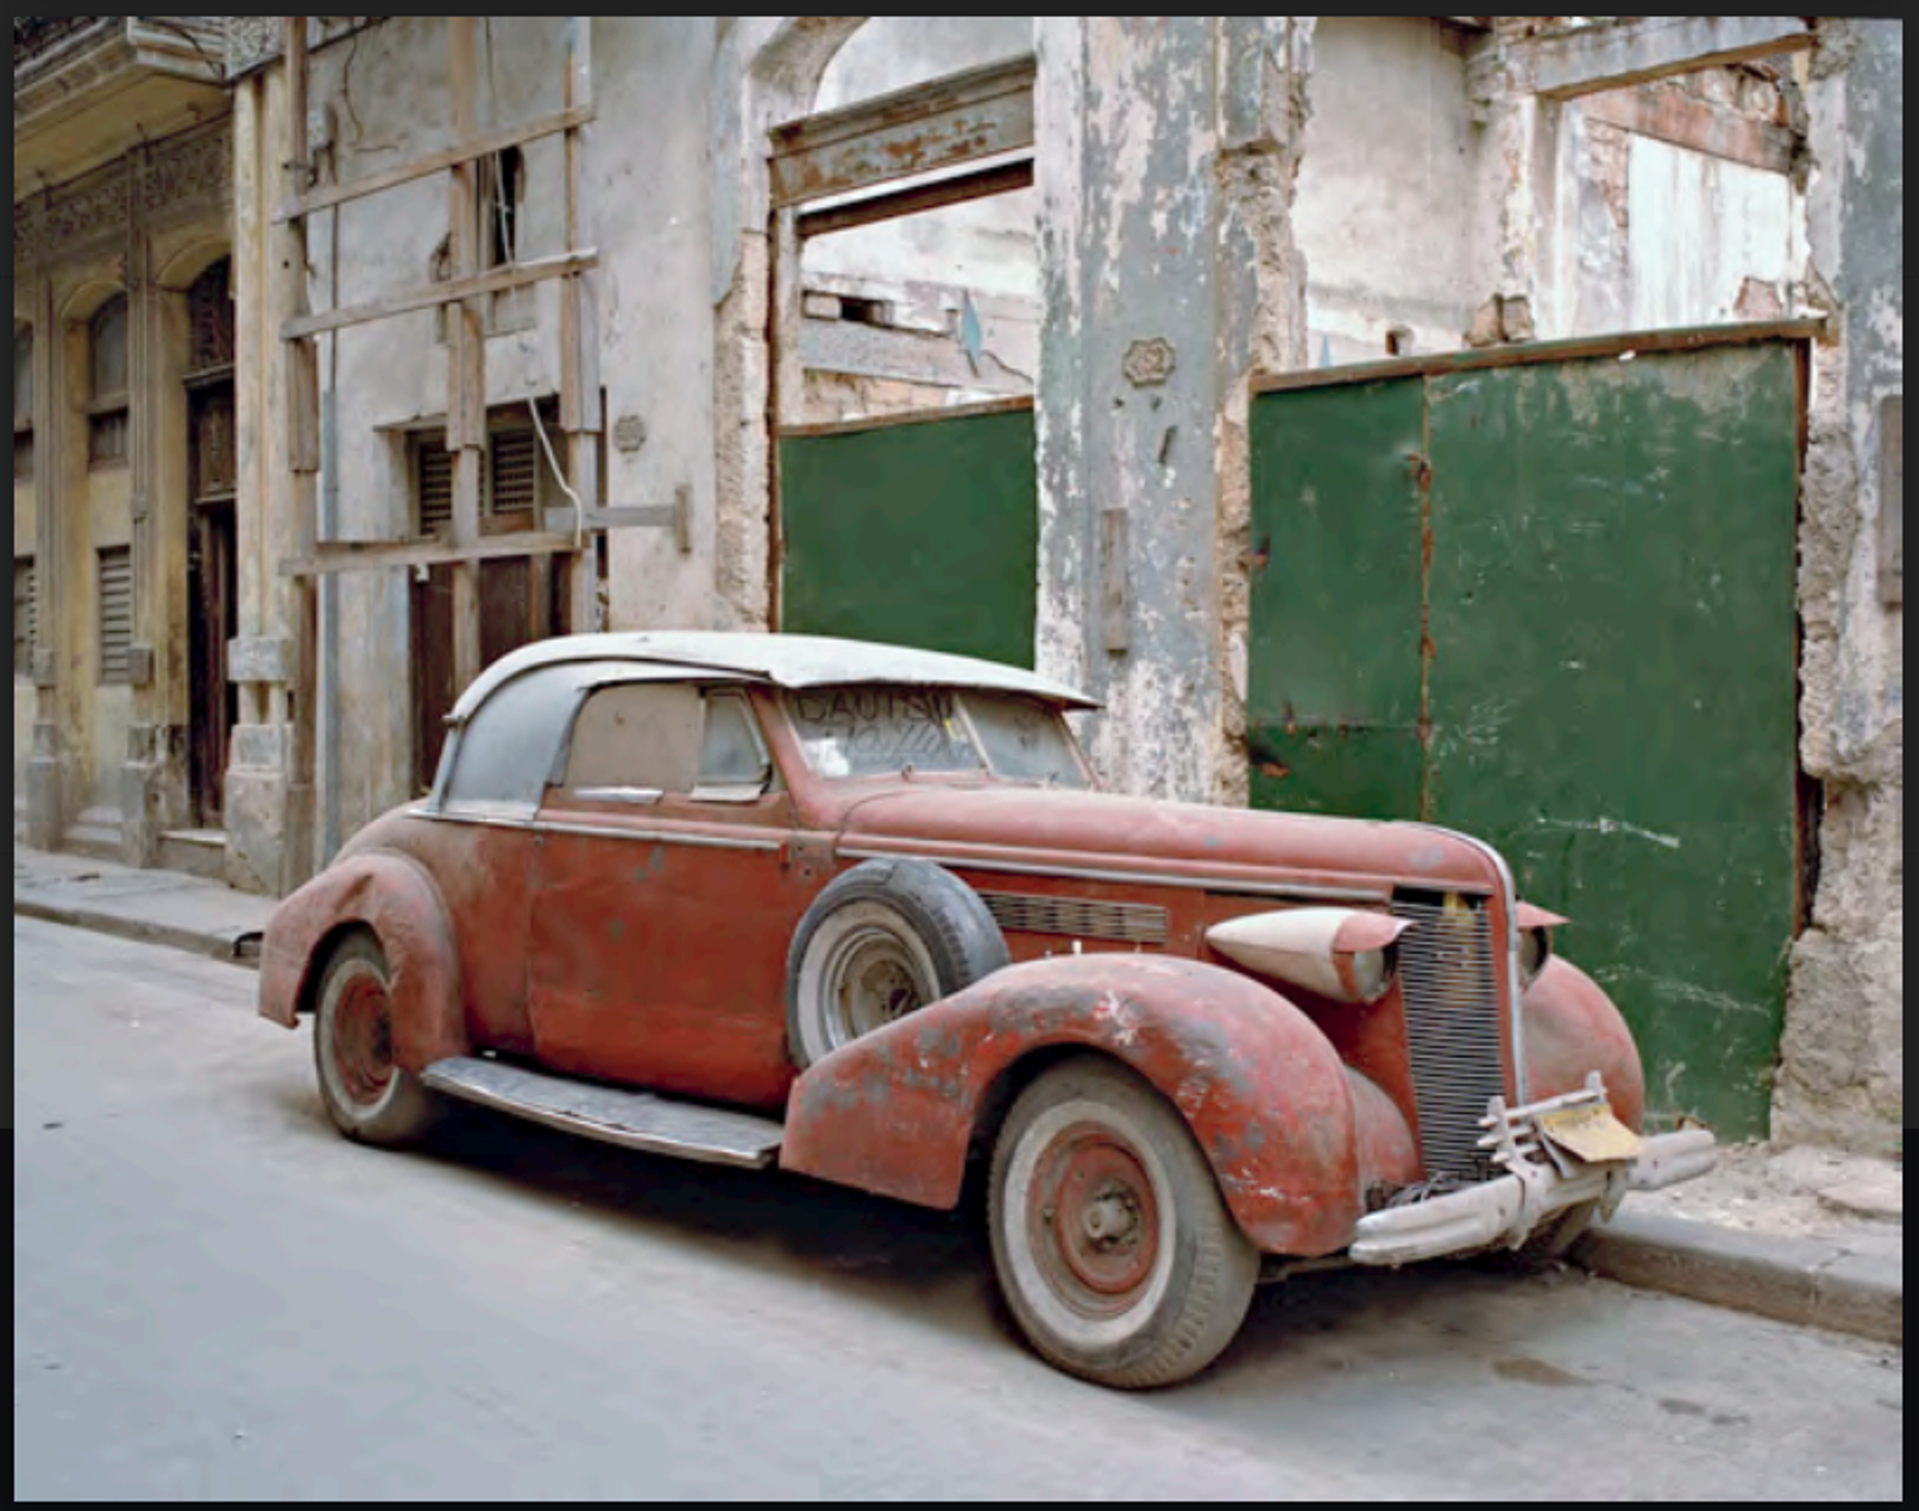 Vintage Red Car, Havana by Robert Polidori